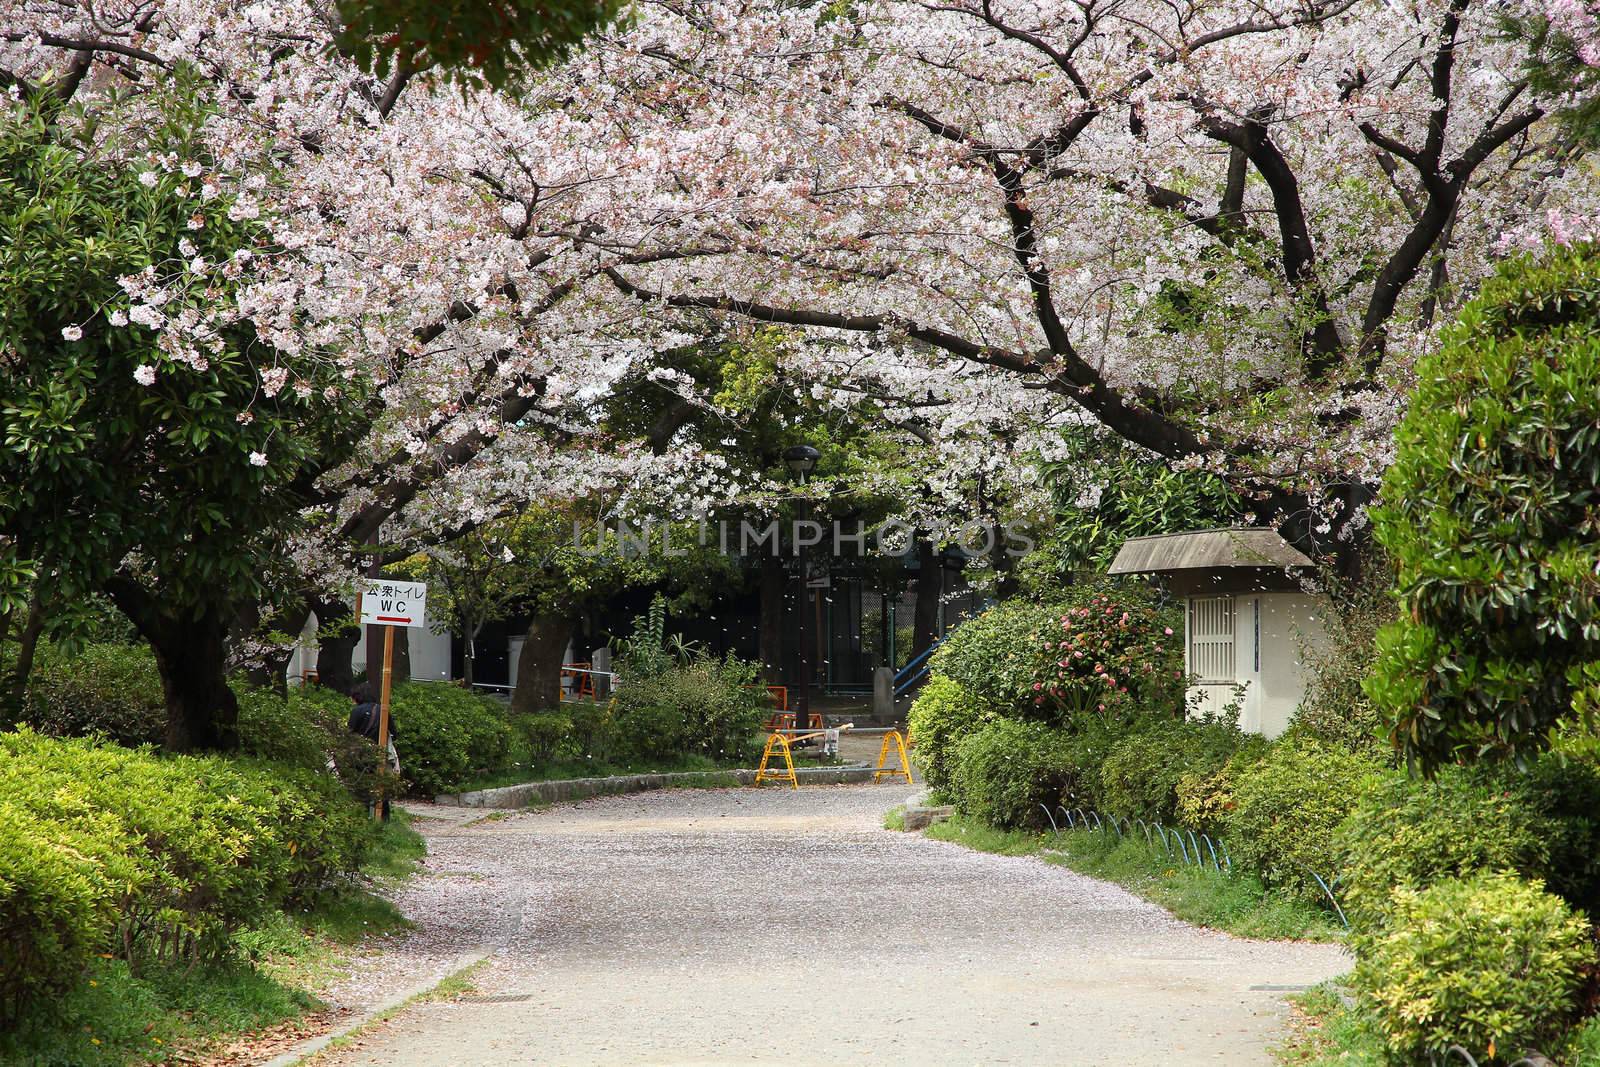 Cherry blossom in Tokyo by tupungato